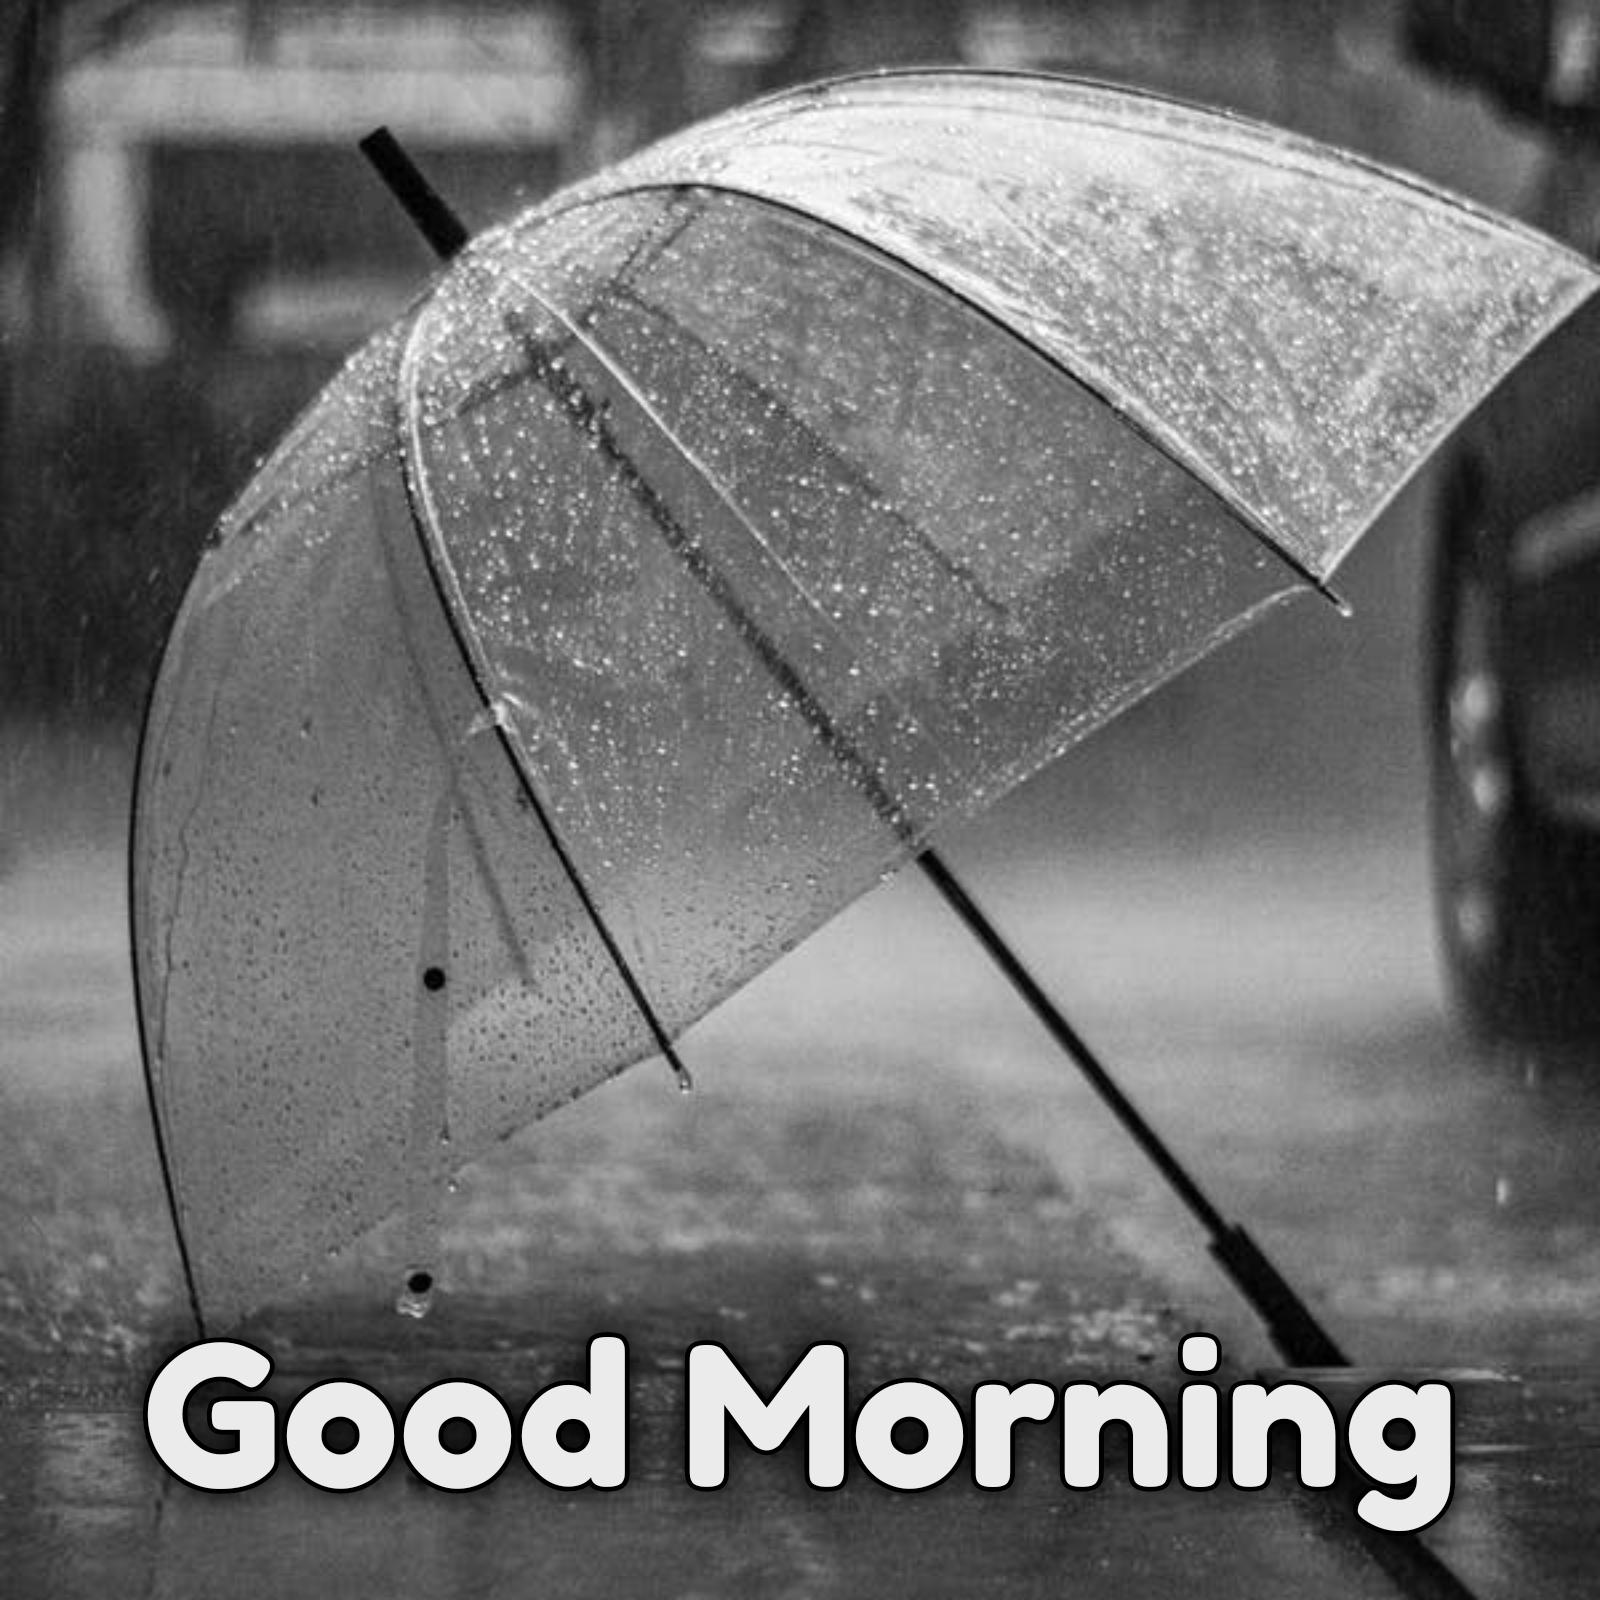 Good Morning Rain Umbrella Images